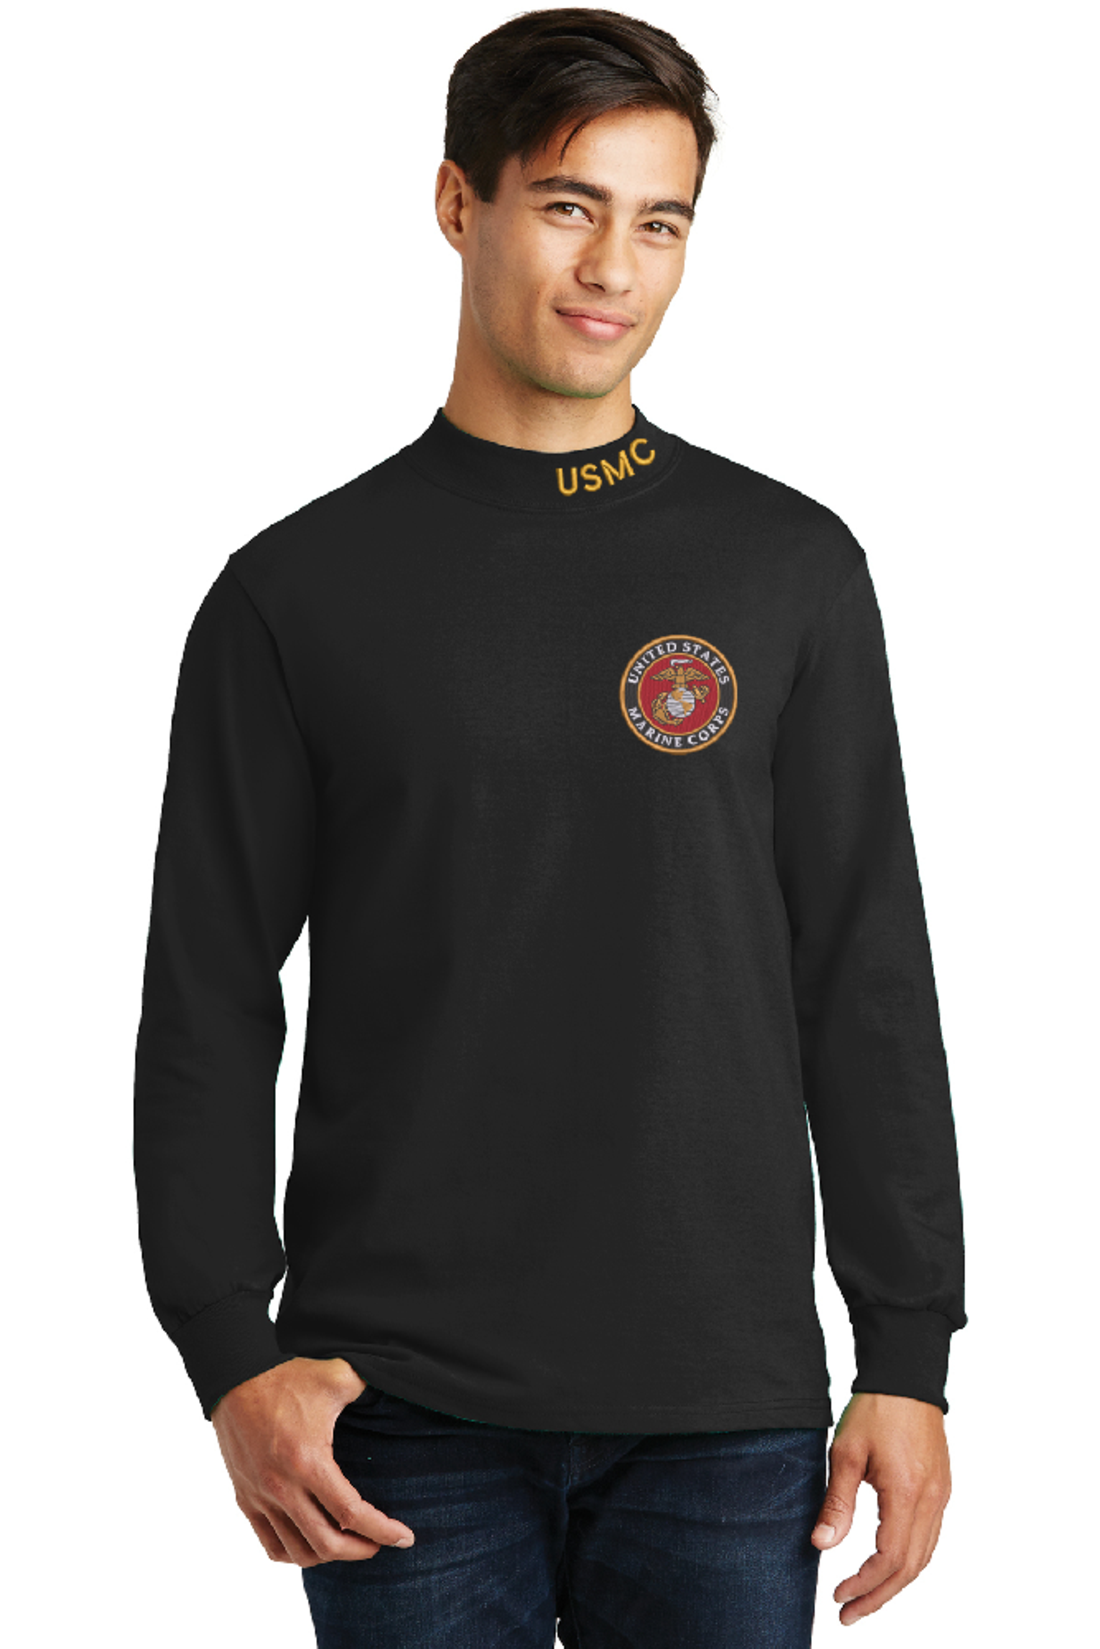 US Marines Embroidered Mock Turtleneck Shirt - Teamlogo.com | Custom ...